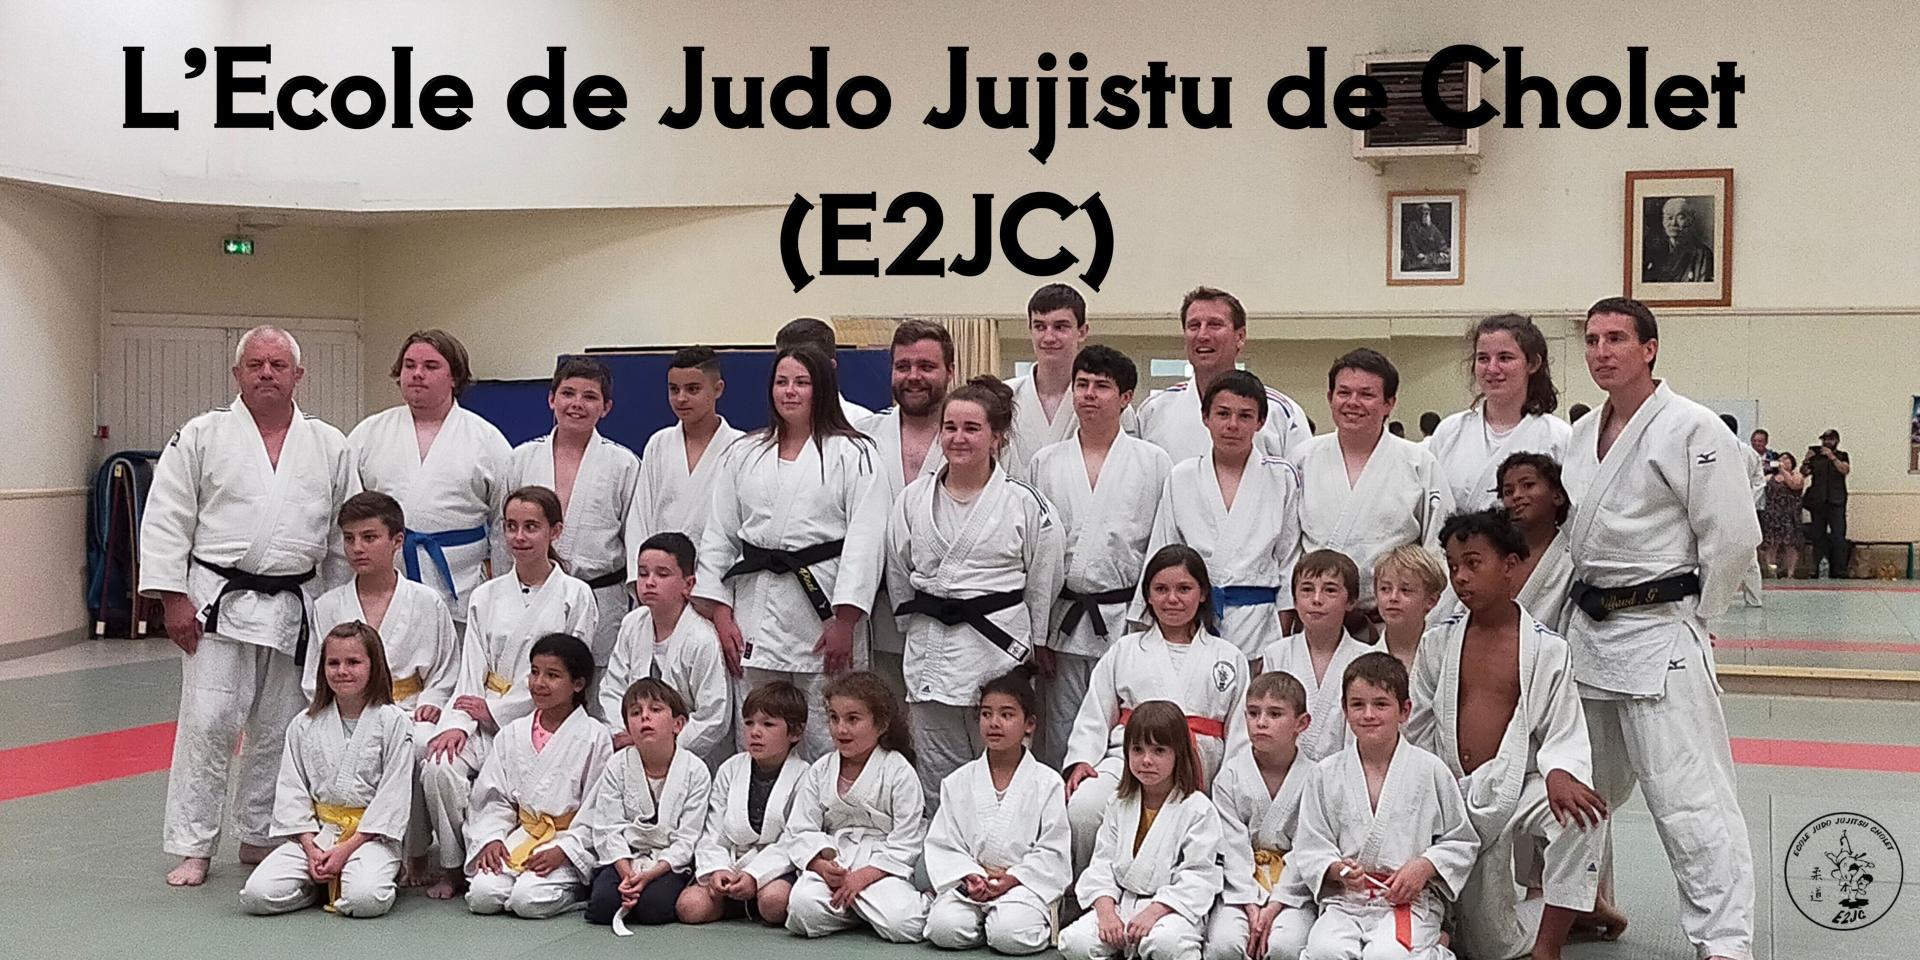 L ecole de judo jujistu de cholet e2jc 1